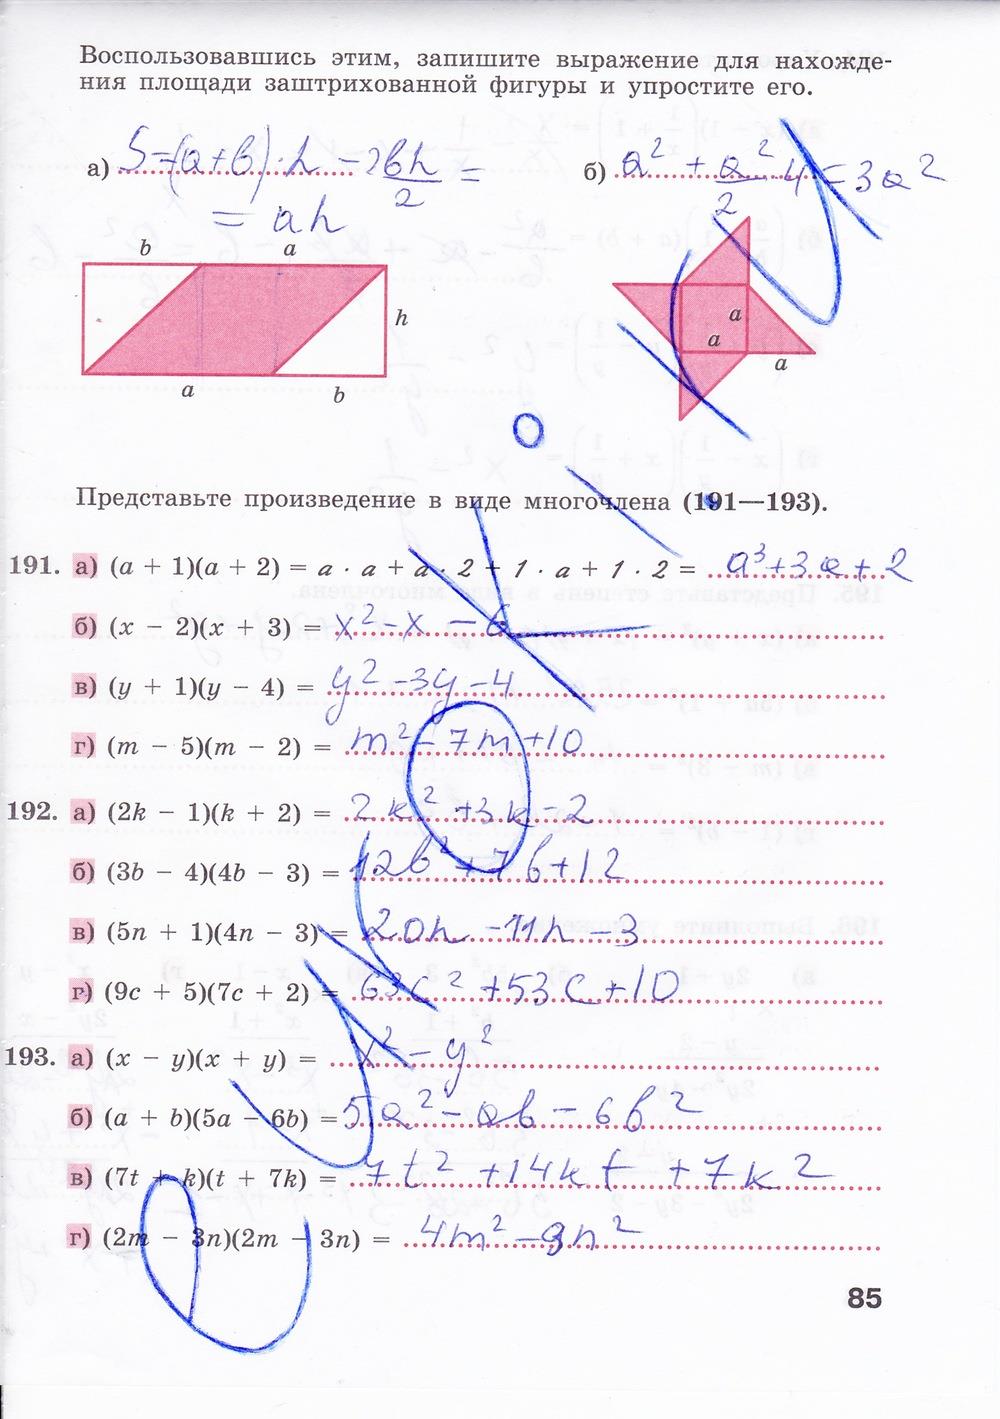 гдз 7 класс рабочая тетрадь страница 85 алгебра Минаева, Рослова